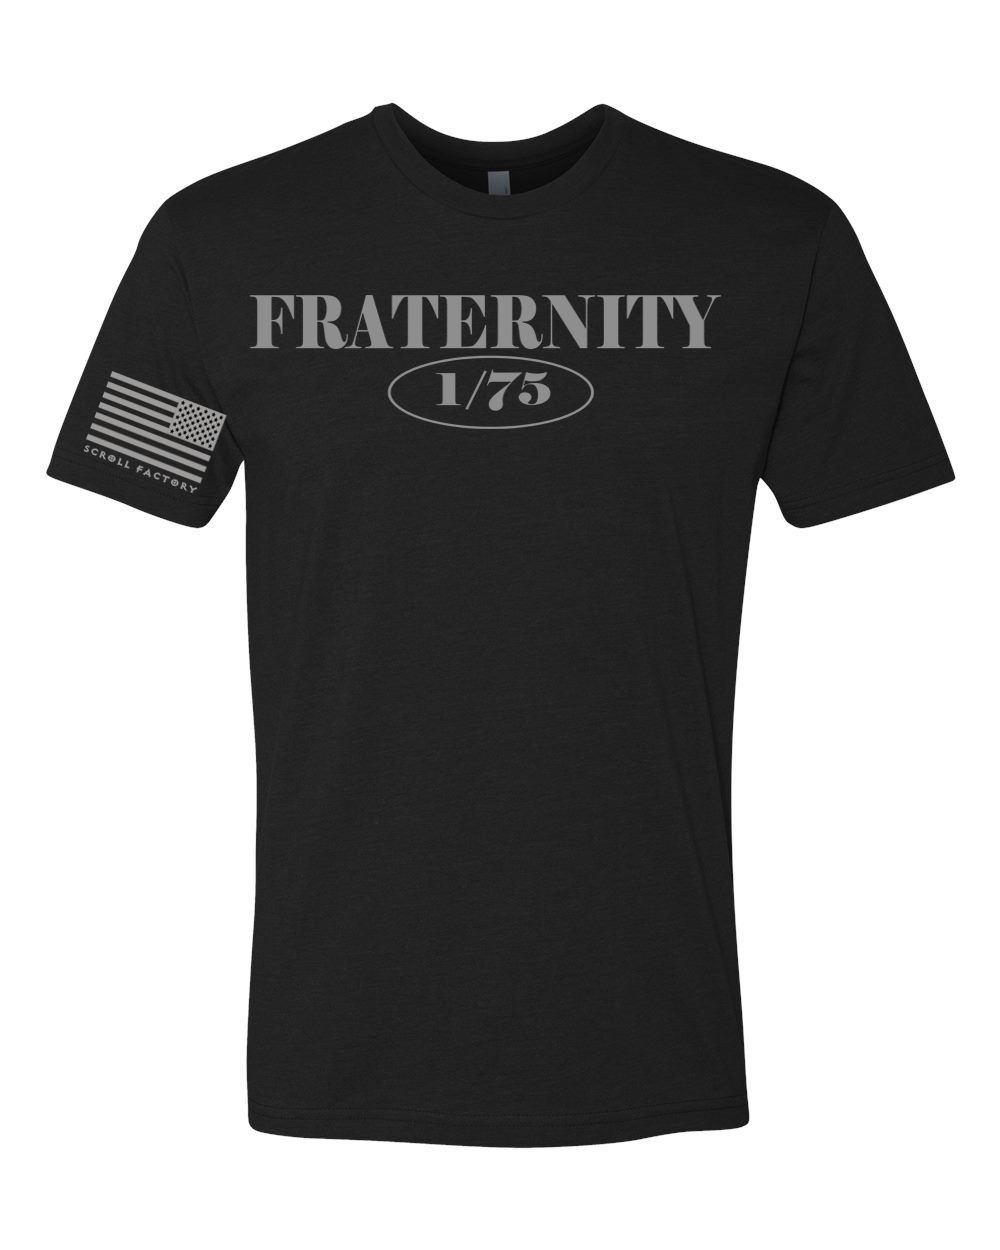 Ranger Bn Fraternity Shirt – Scroll Factory